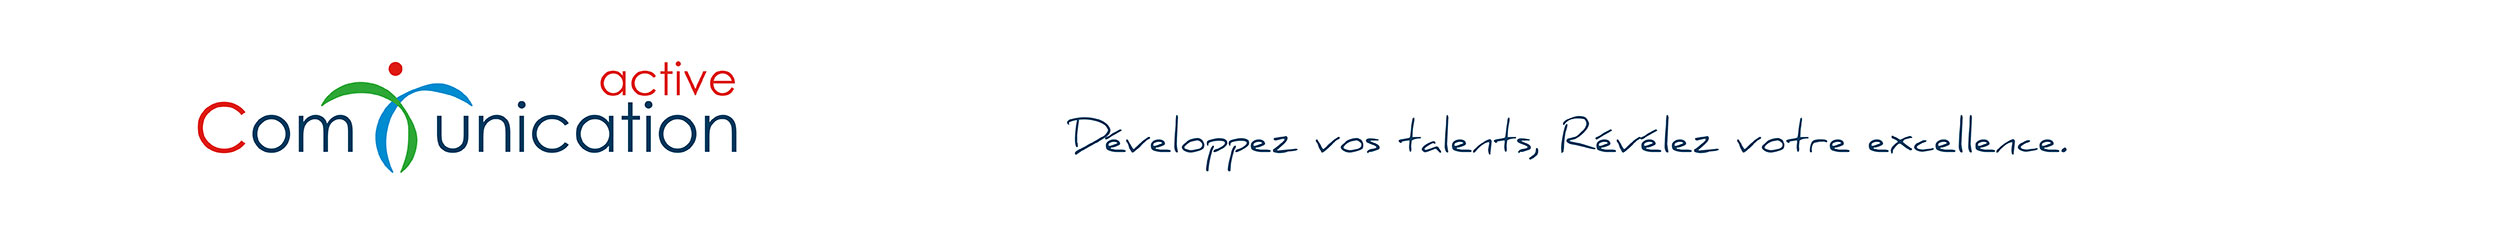 Communication Active Normandie Logo